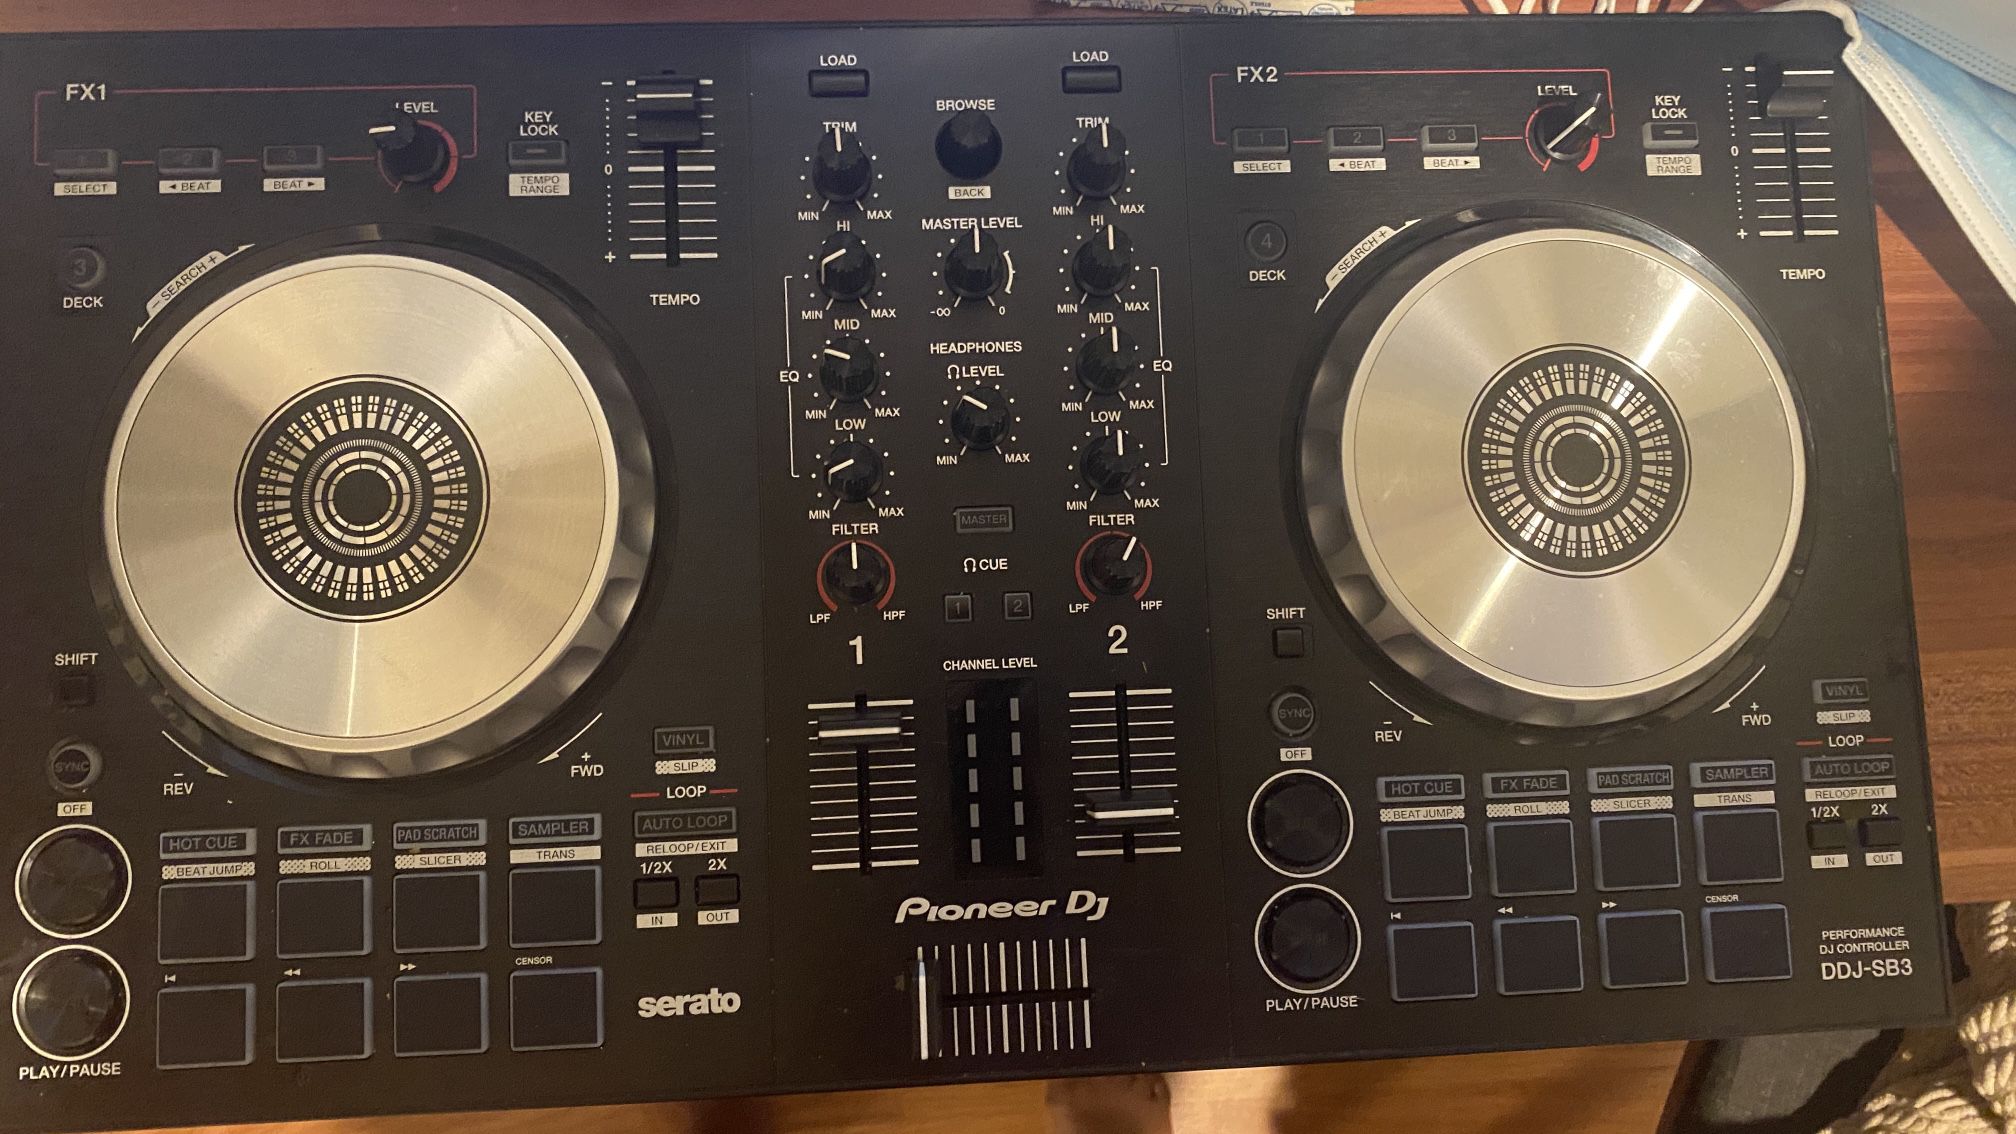 Pioneer DJ DDJ-SB3 Serato DJ Controller with Pad Scratch"